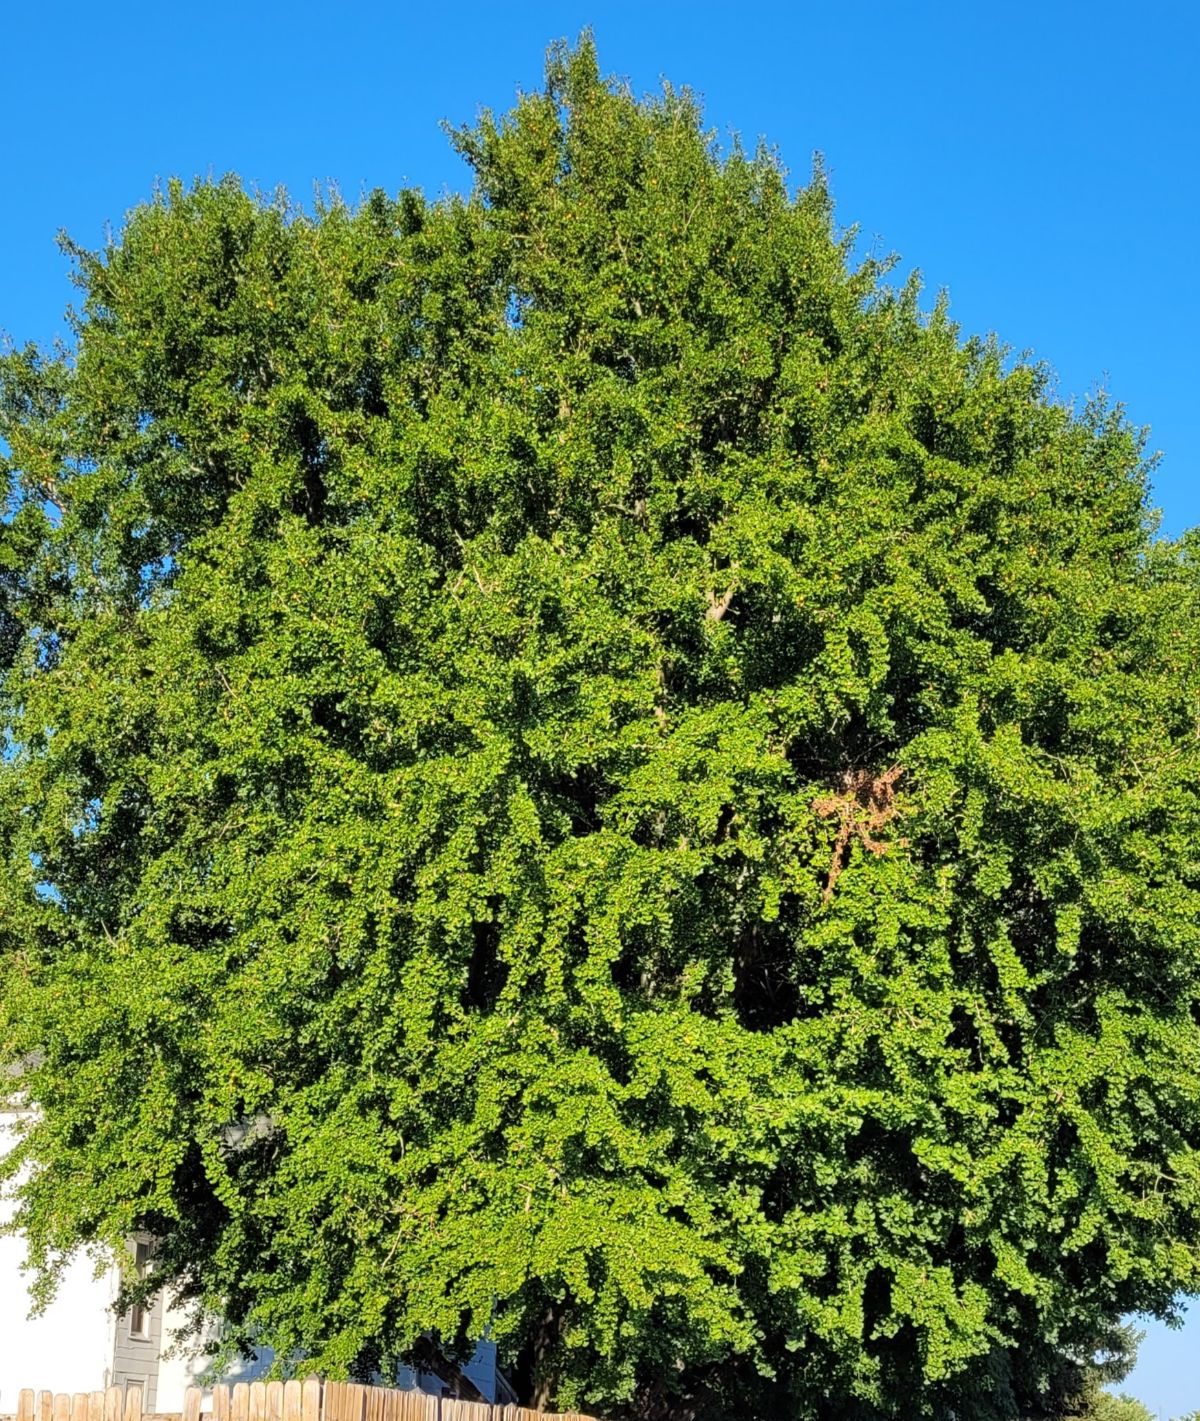 A mature ginkgo tree